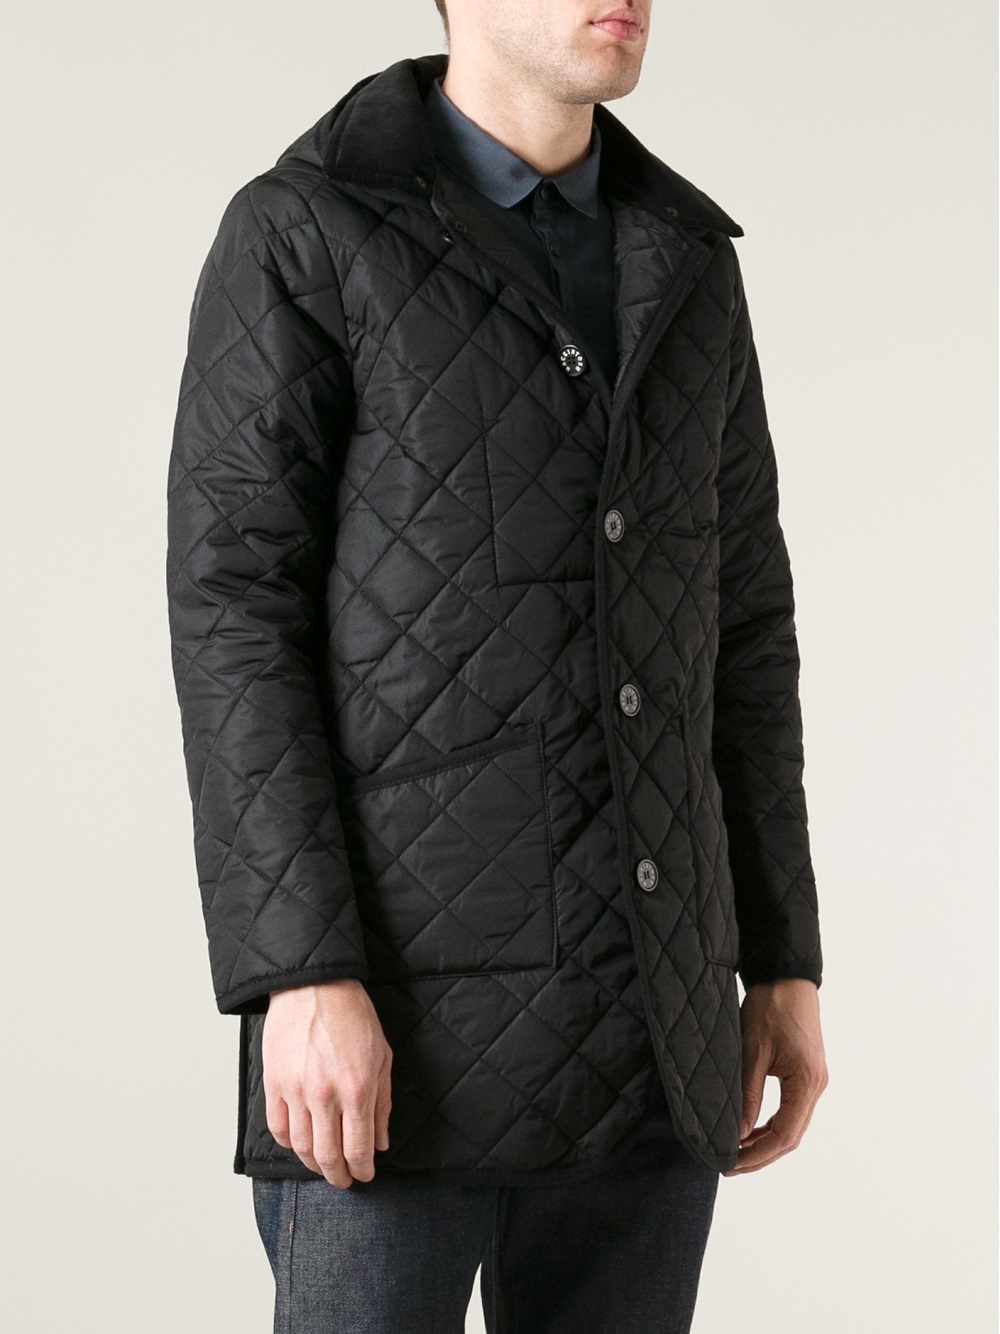 Mackintosh Waverly Long Coat in Black for Men - Lyst